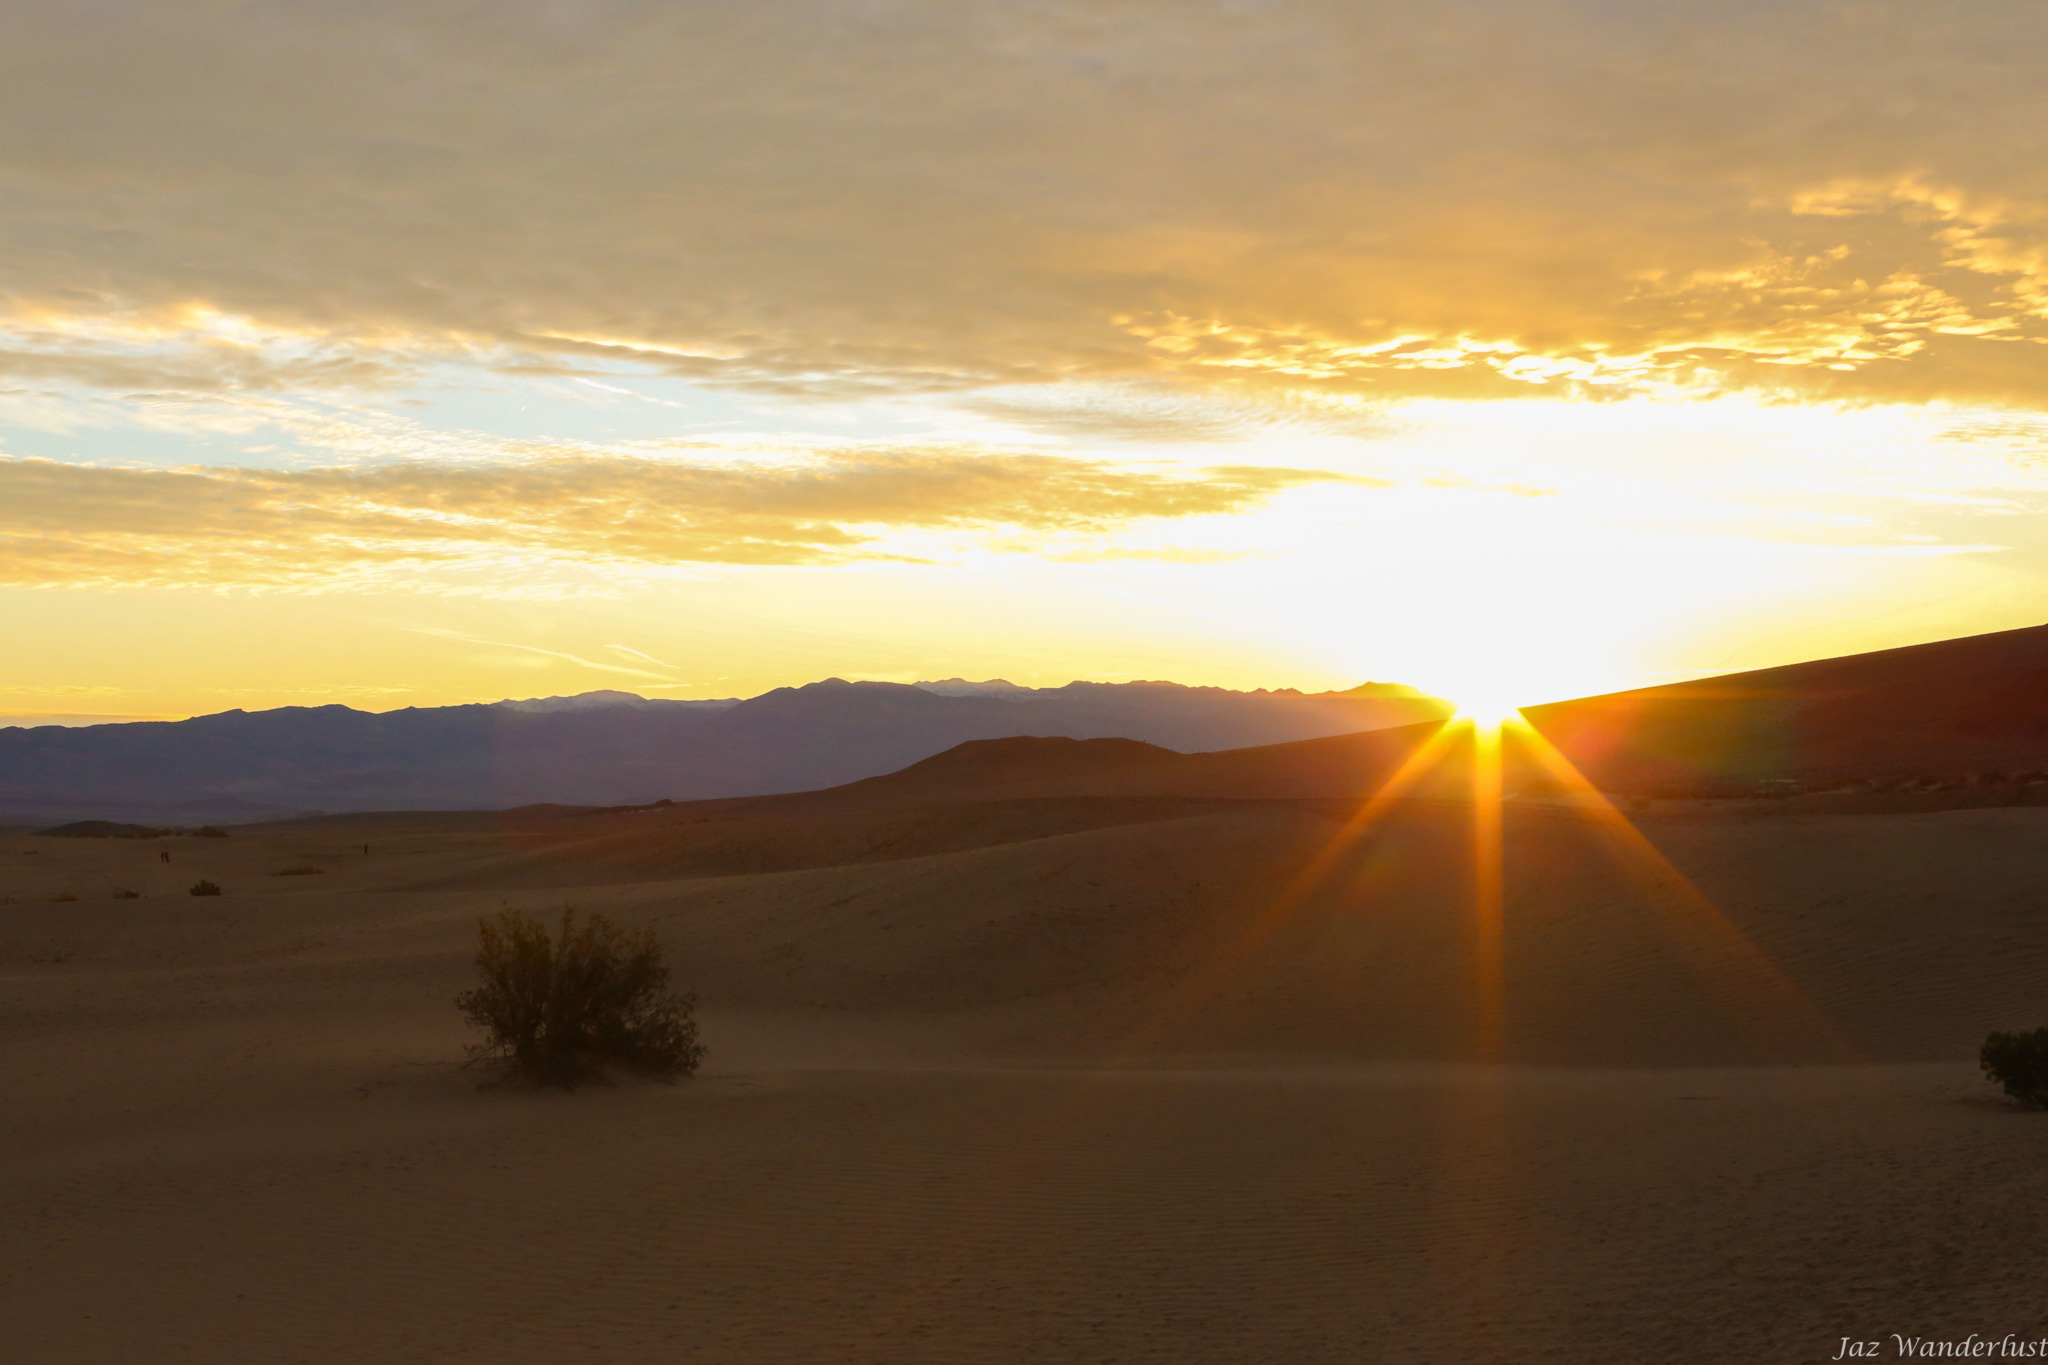 Mesquite Flat Sand Dunes in Death Valley. Photography by Jaz Wanderlust.